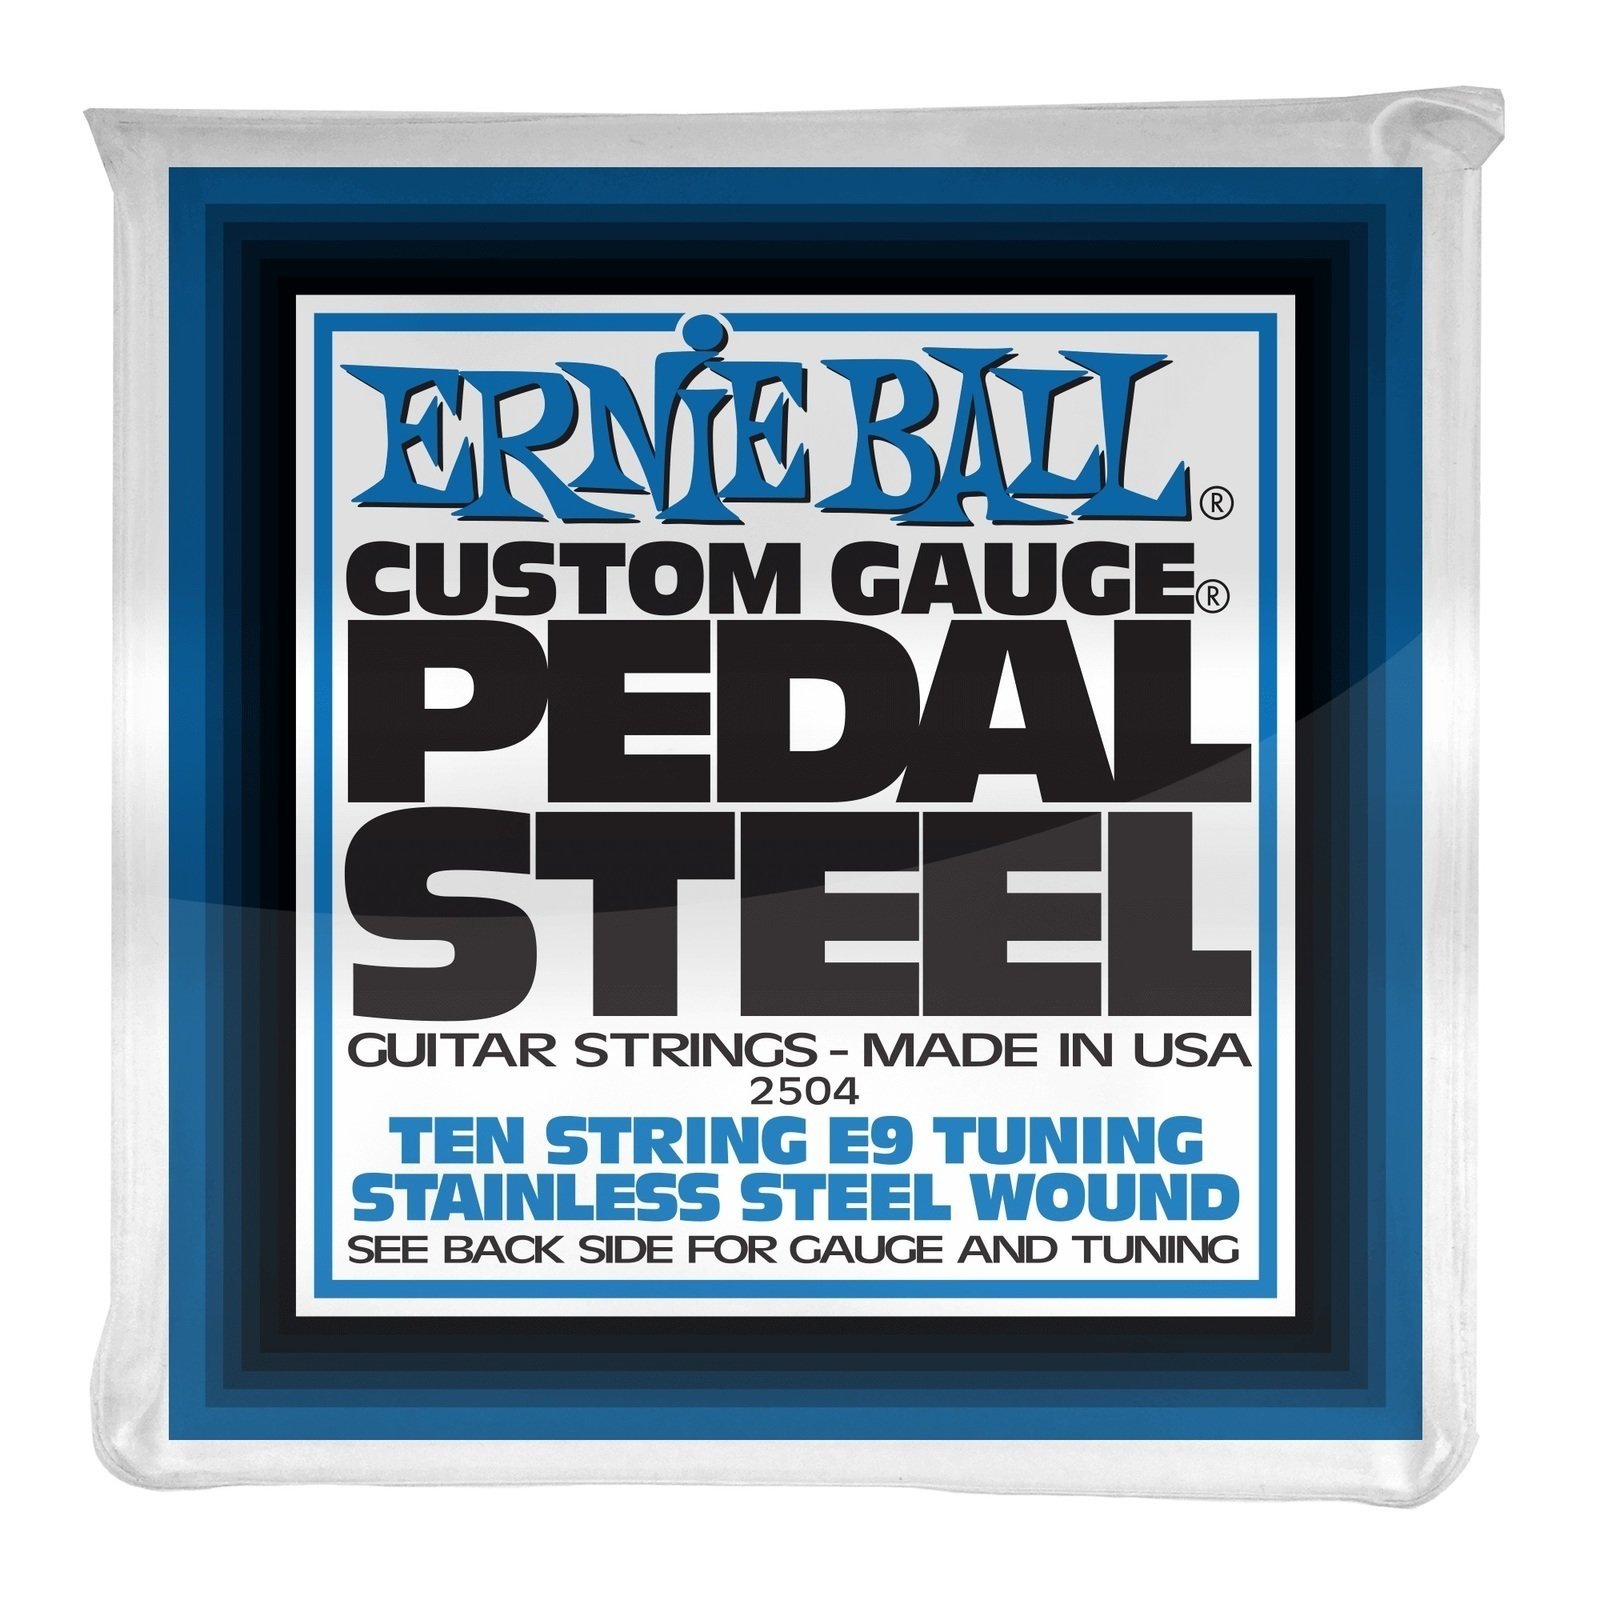 Struny do gitary Ernie Ball 2504 Pedal Steel